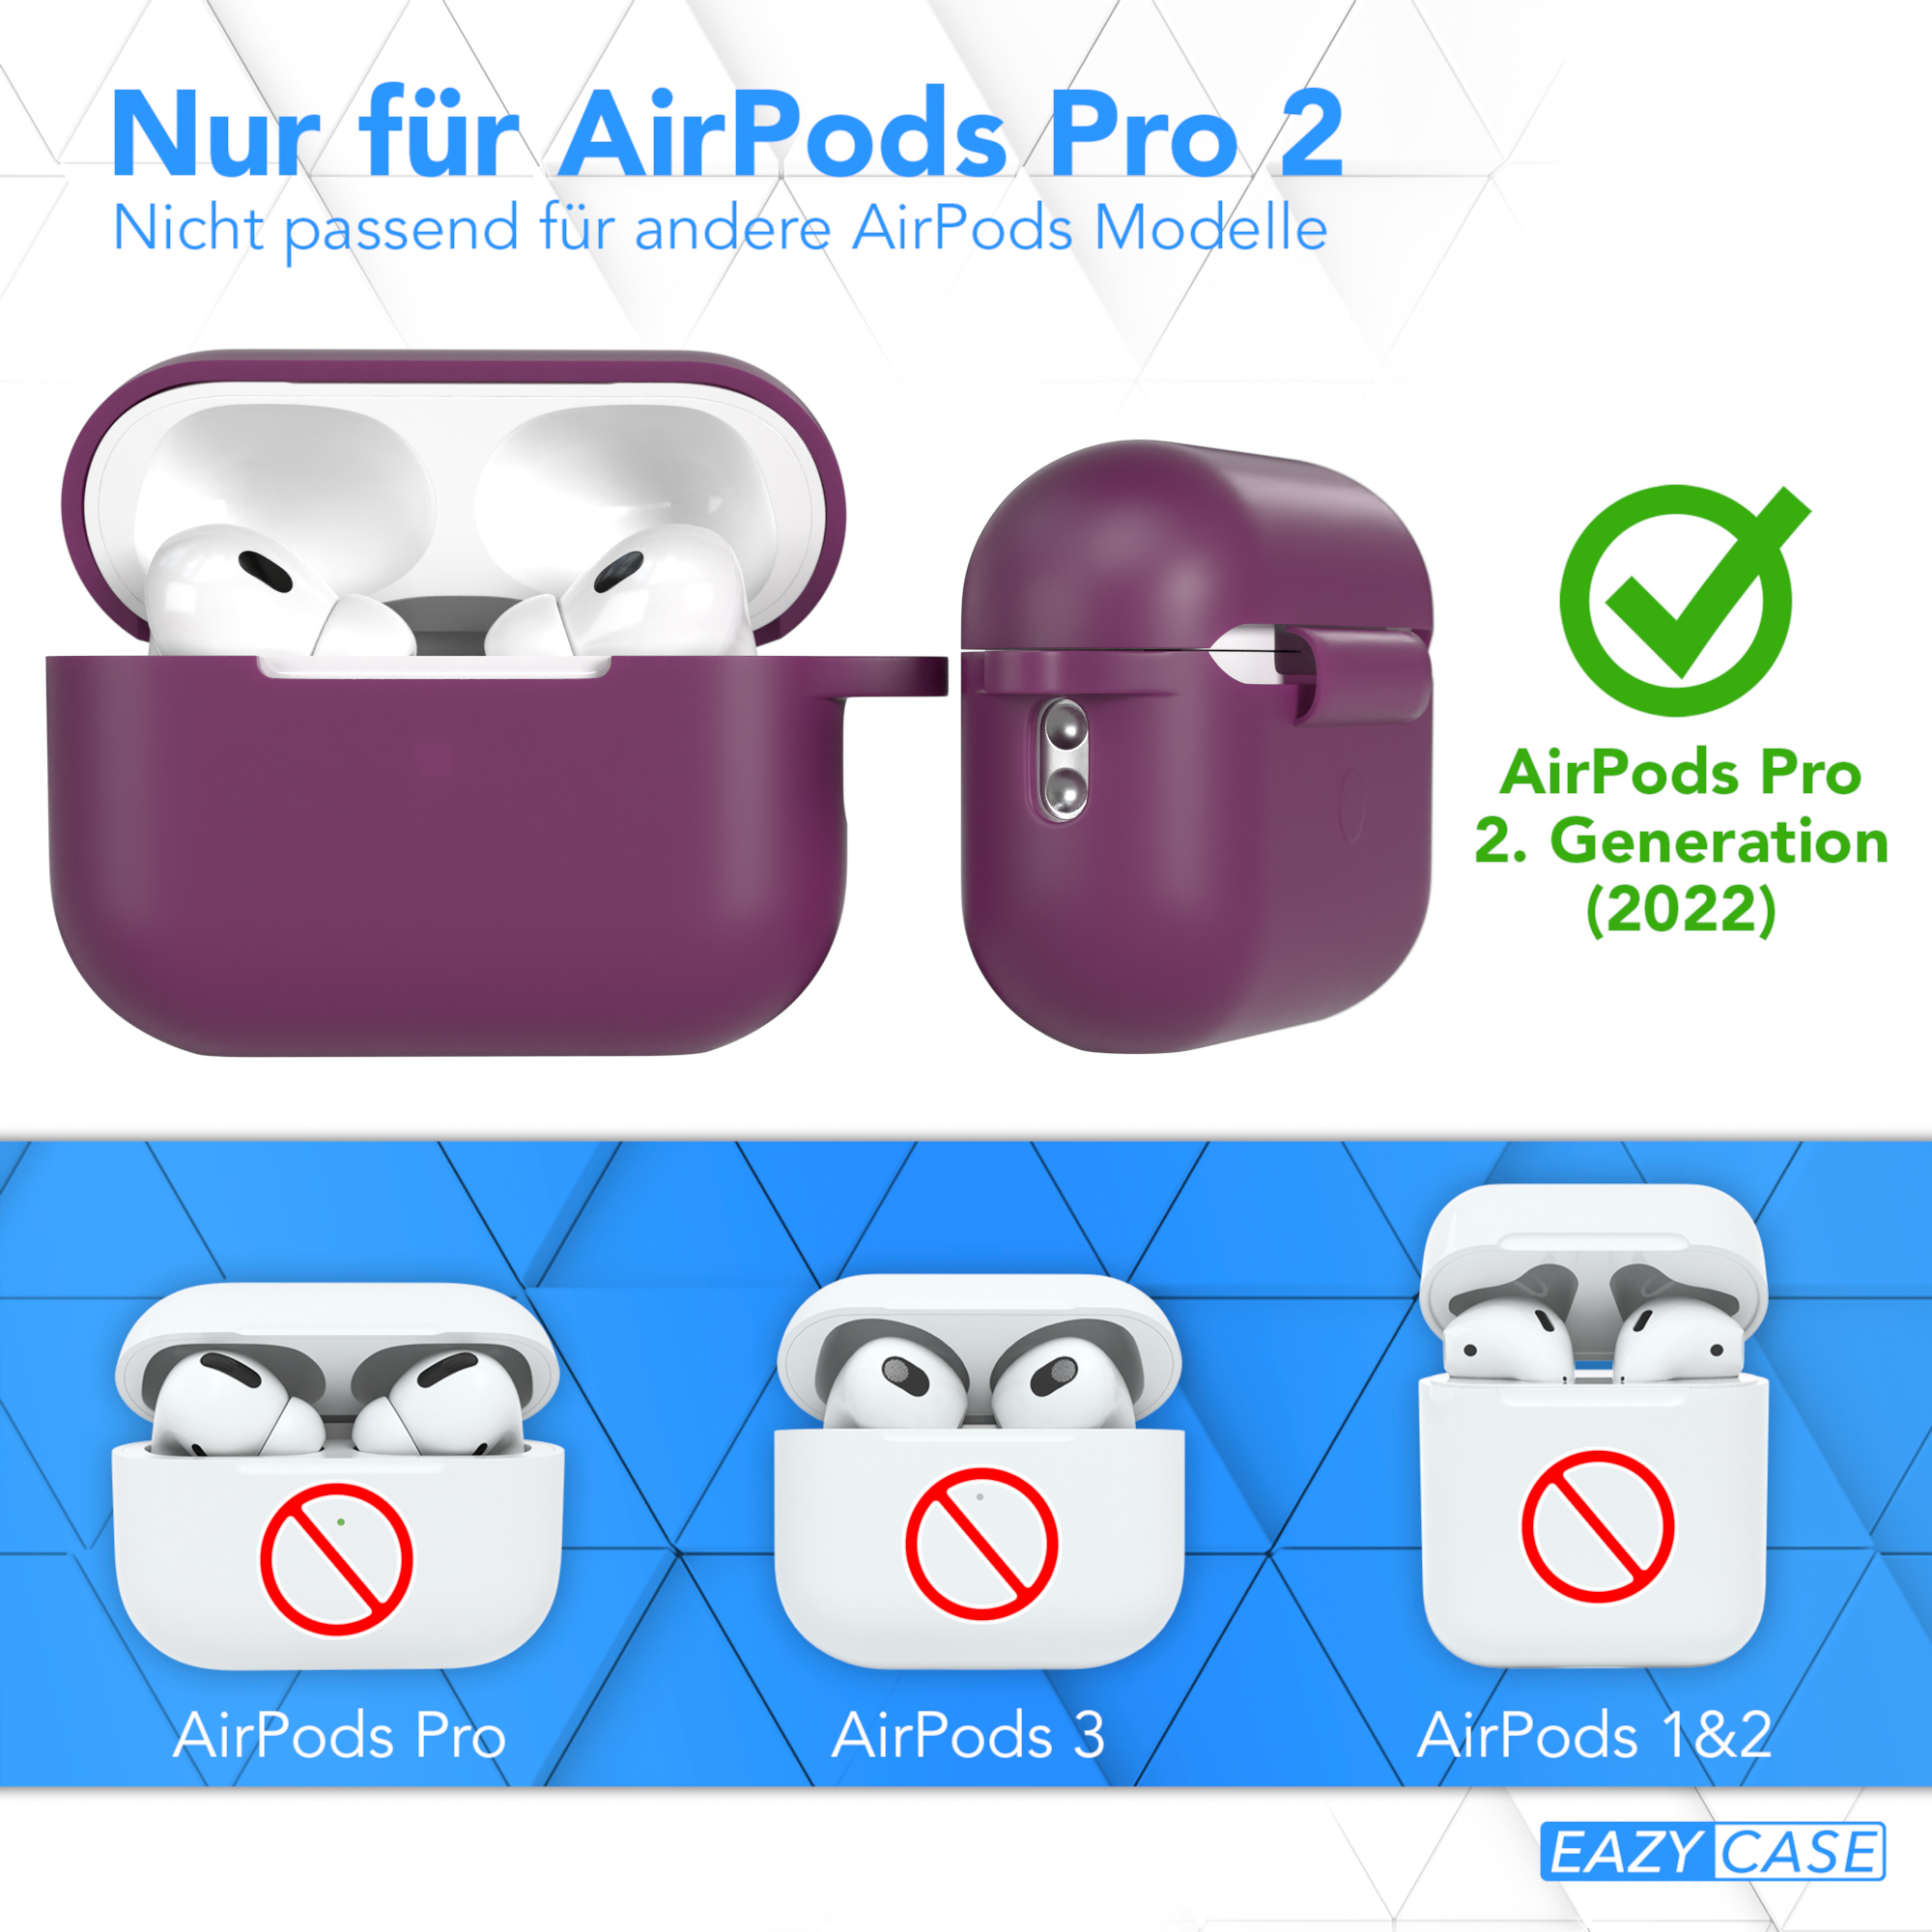 Case / Silikon CASE Apple für: EAZY 2 Sleeve passend Pro Rosegold Lila AirPods Schutzhülle